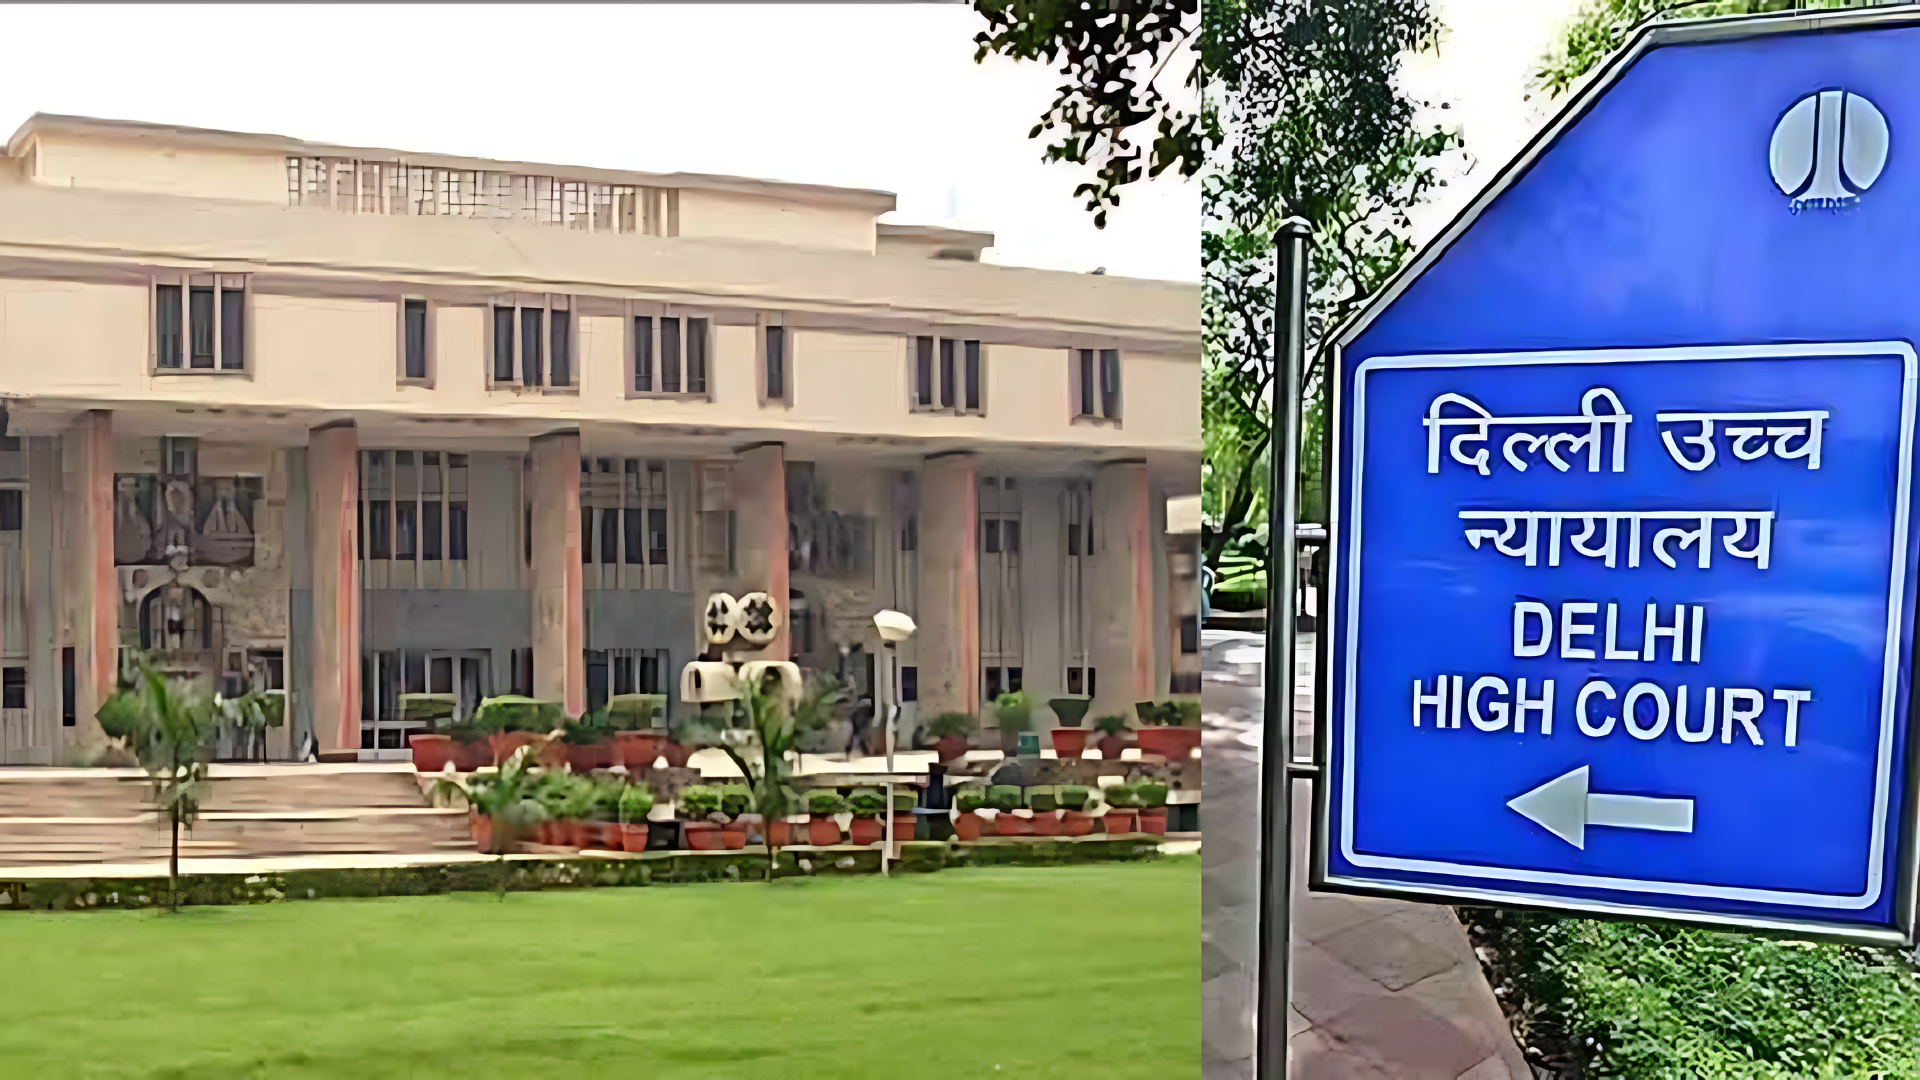 “Kejriwal Not Resigning For Personal Interest:” Delhi High Court